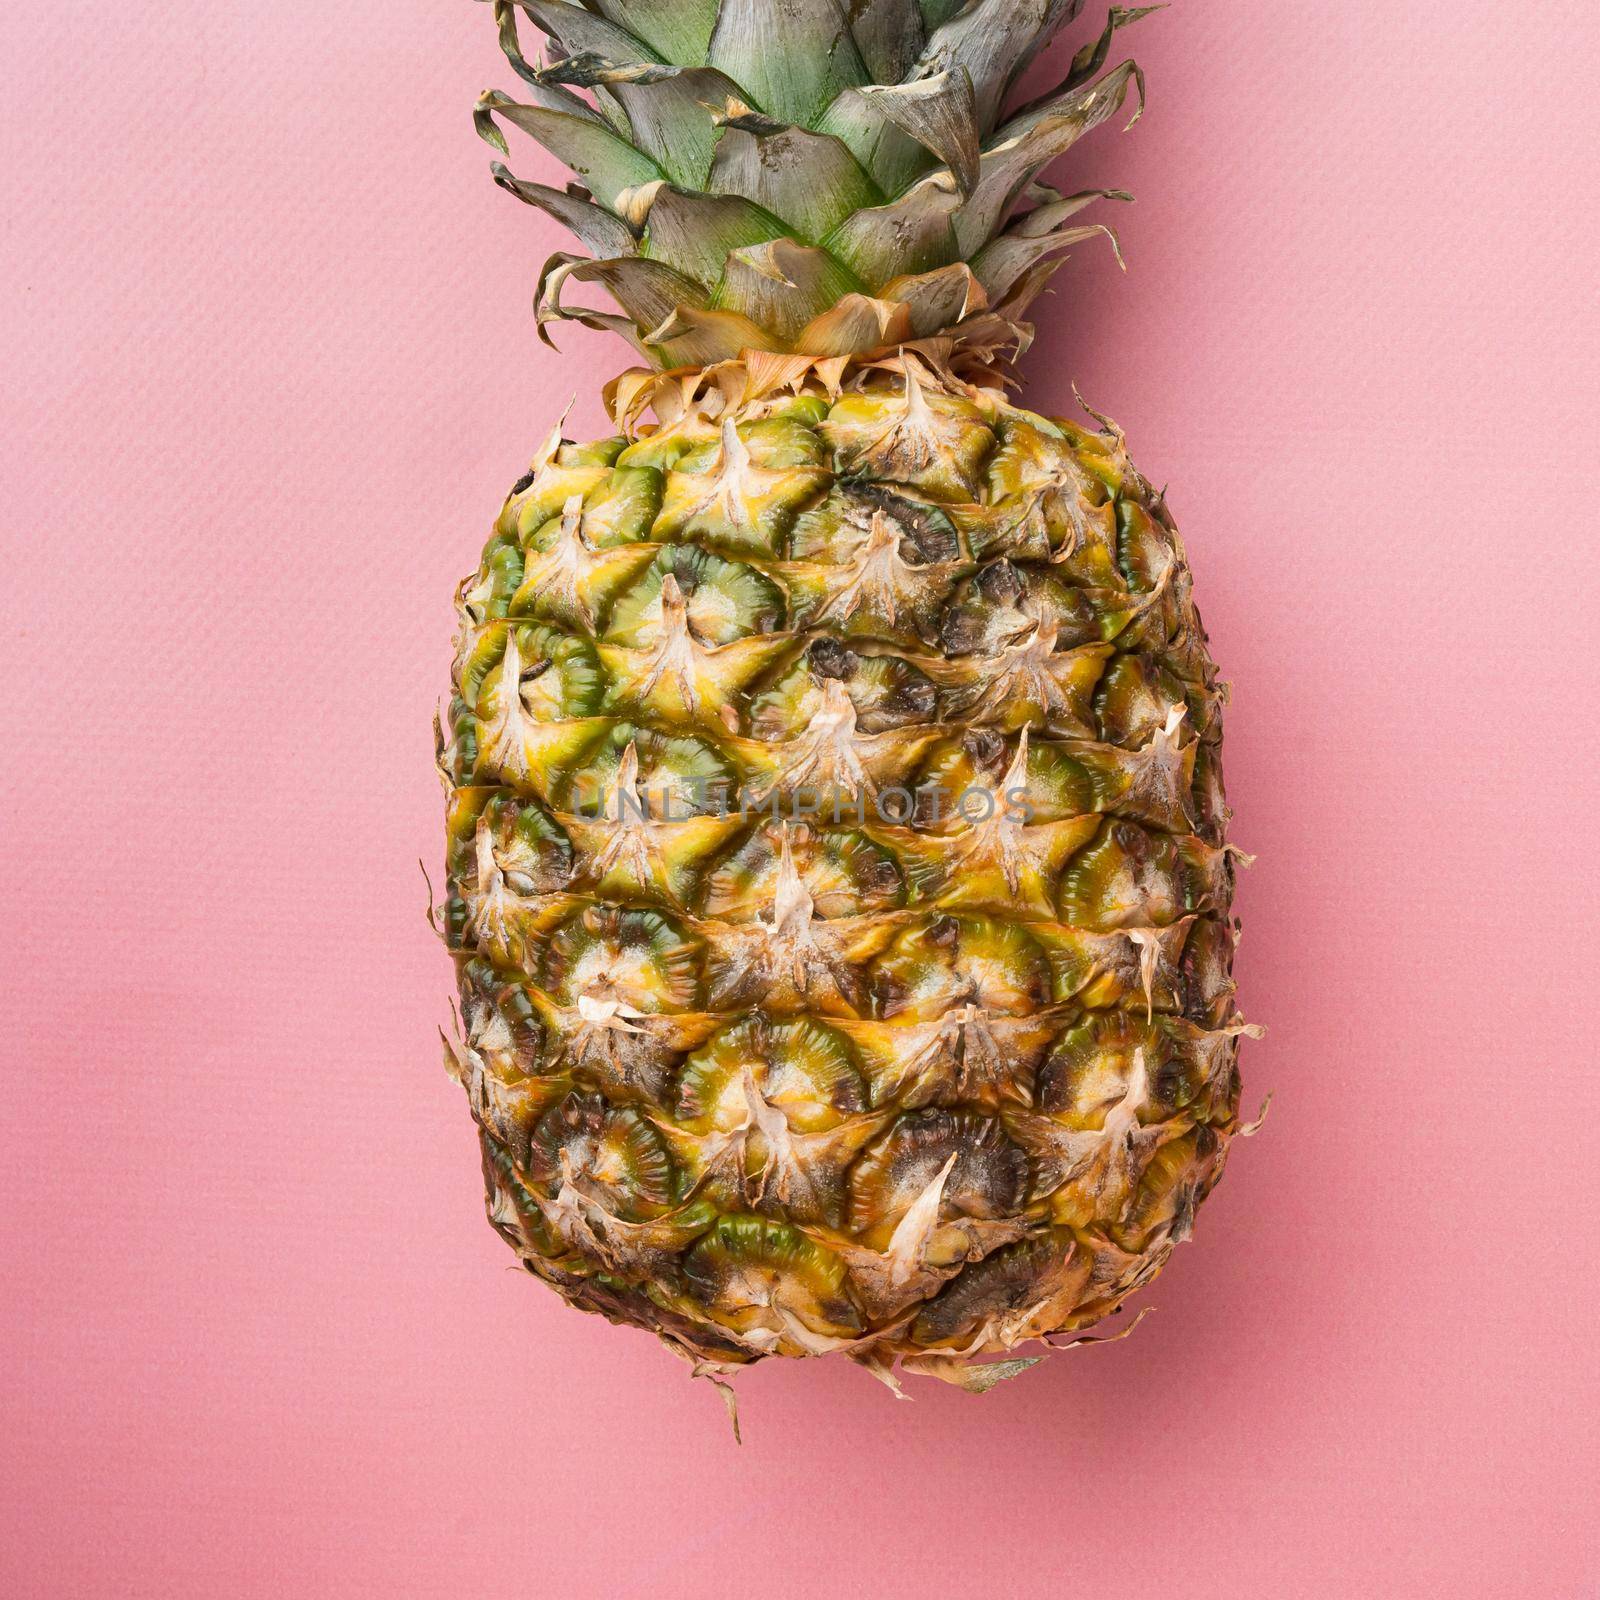 Hawaiian pineapple set, on pink textured summer background, top view flat lay